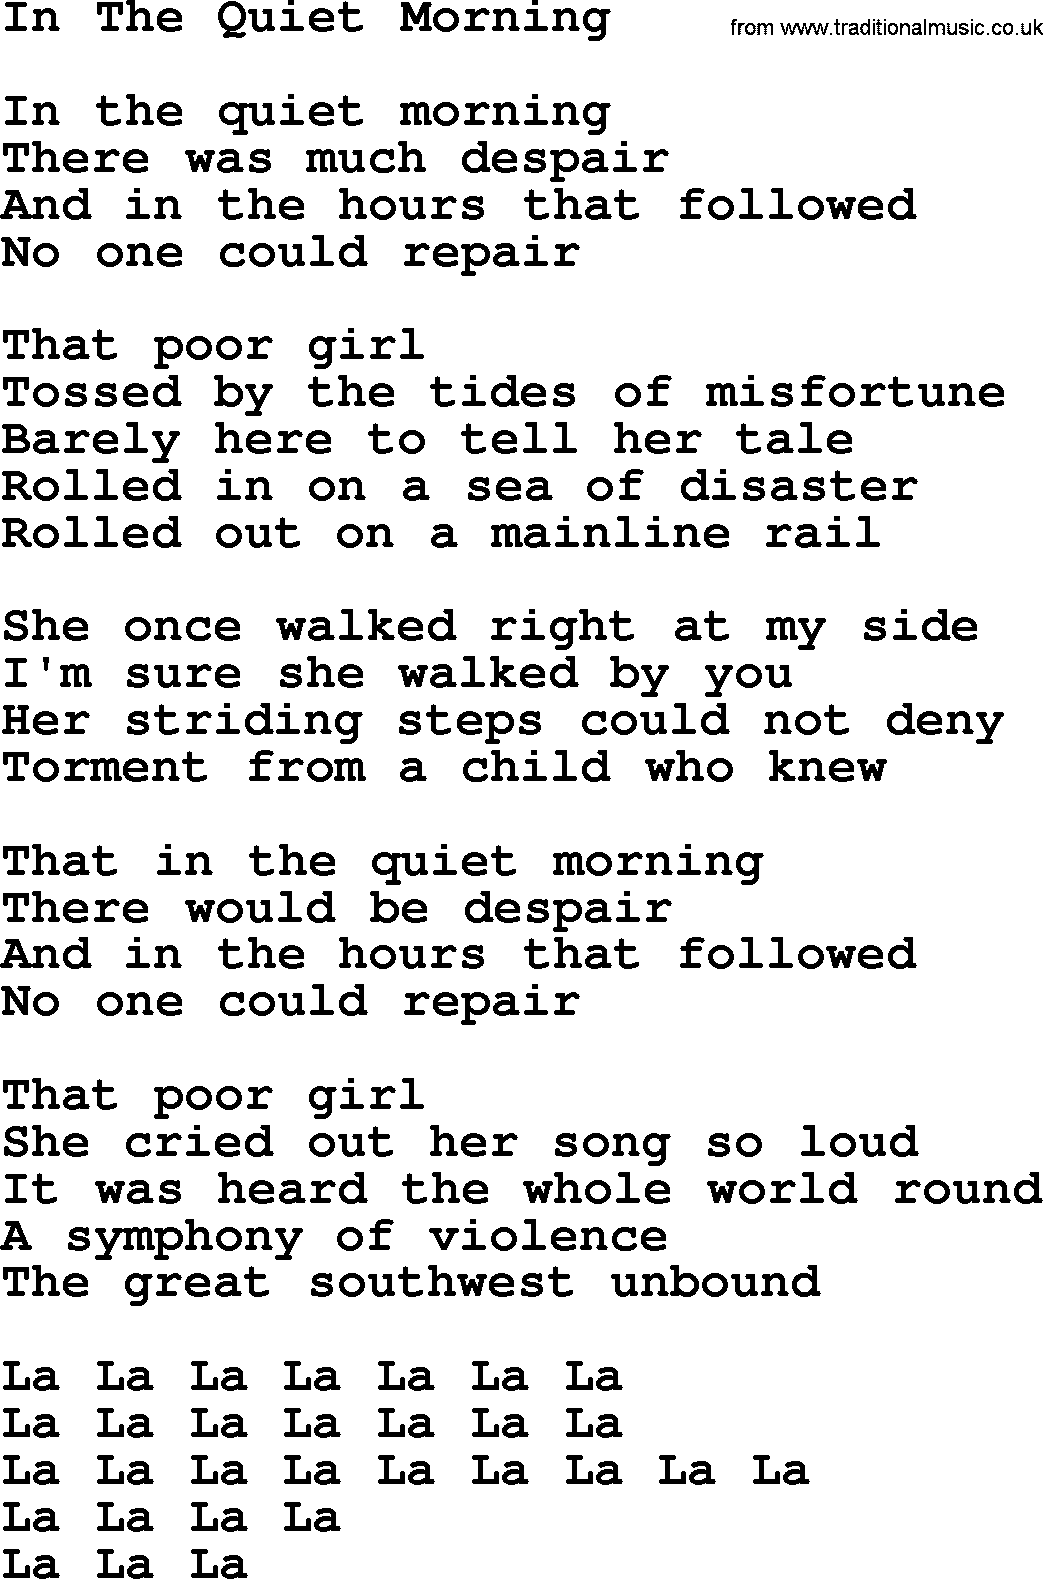 Joan Baez song In The Quiet Morning, lyrics